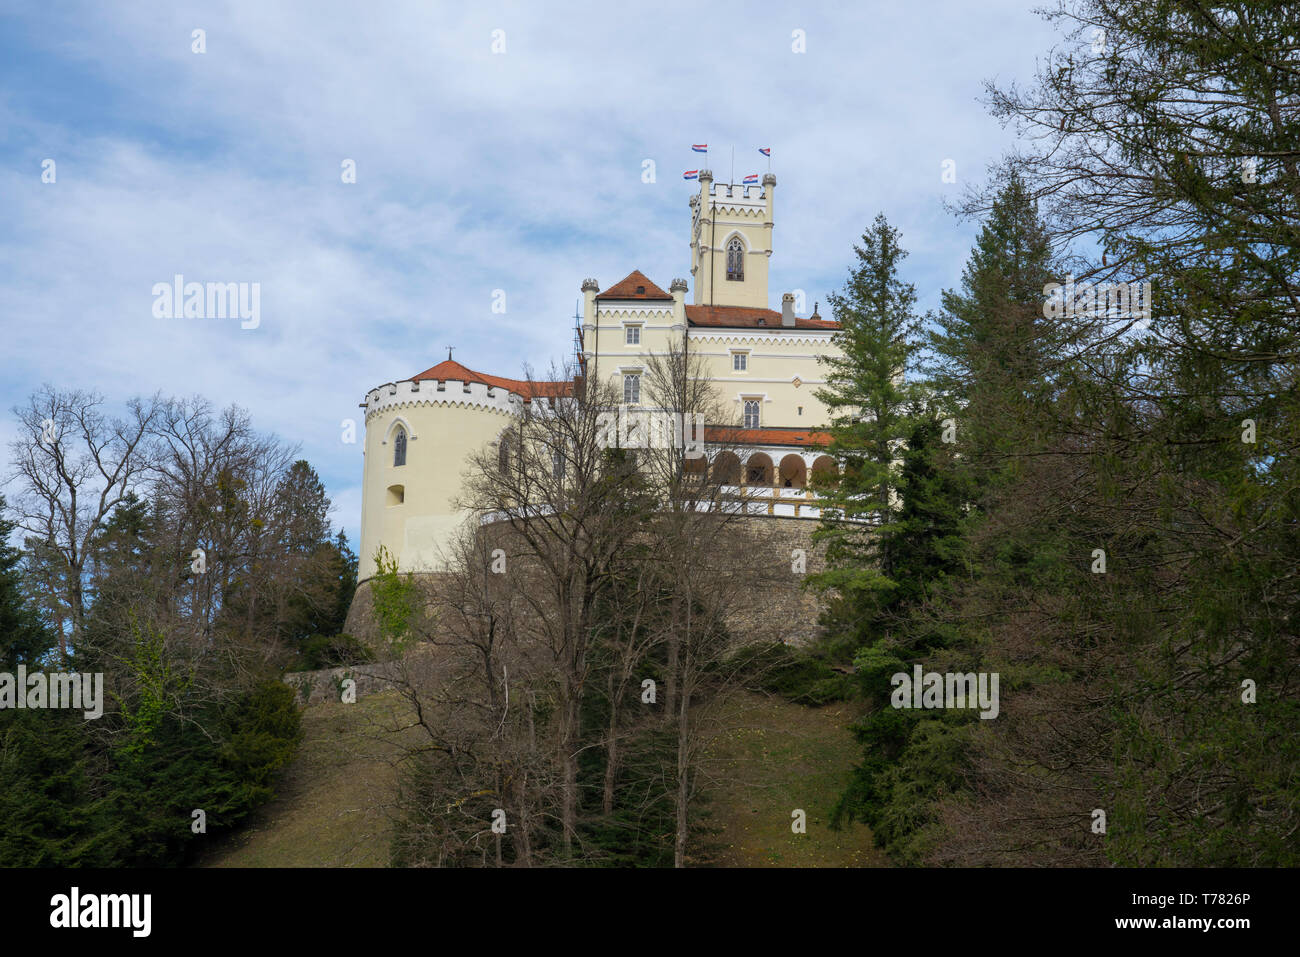 The Trakoscan Castle, Zagorje, Croatia Stock Photo